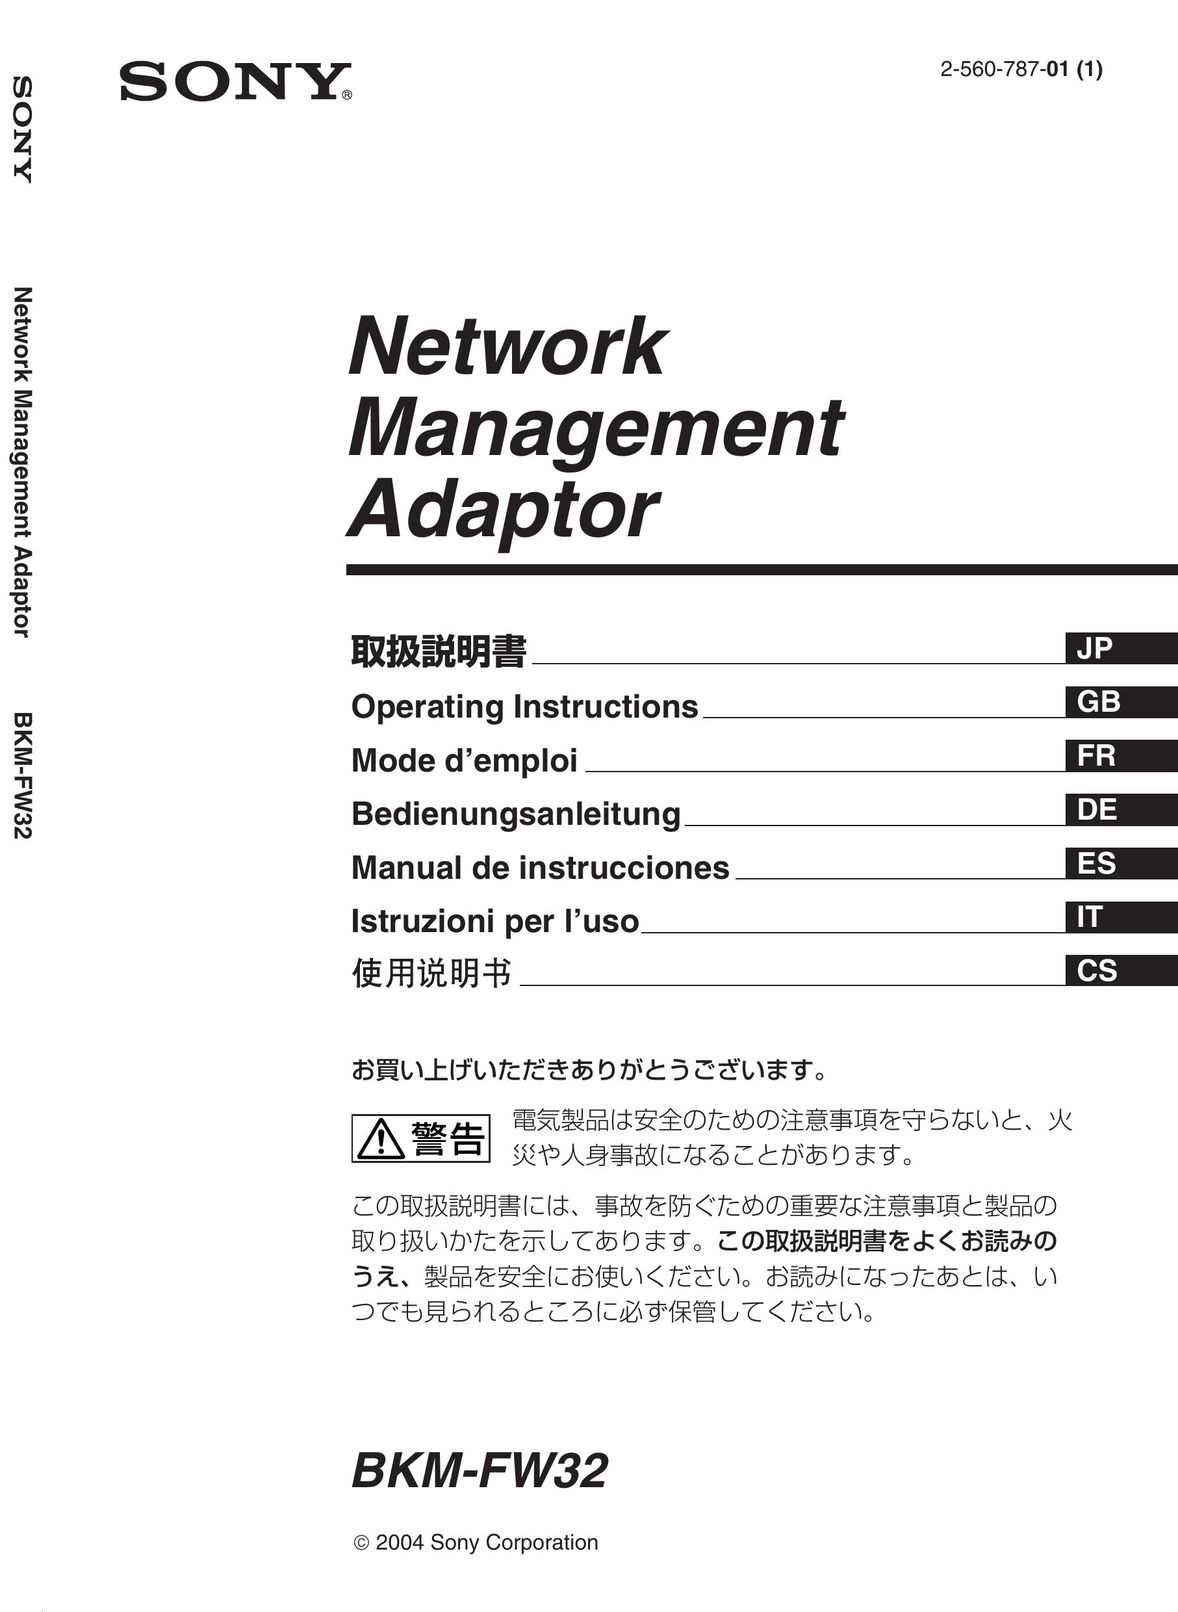 Sony BKM-FW32 Network Card User Manual